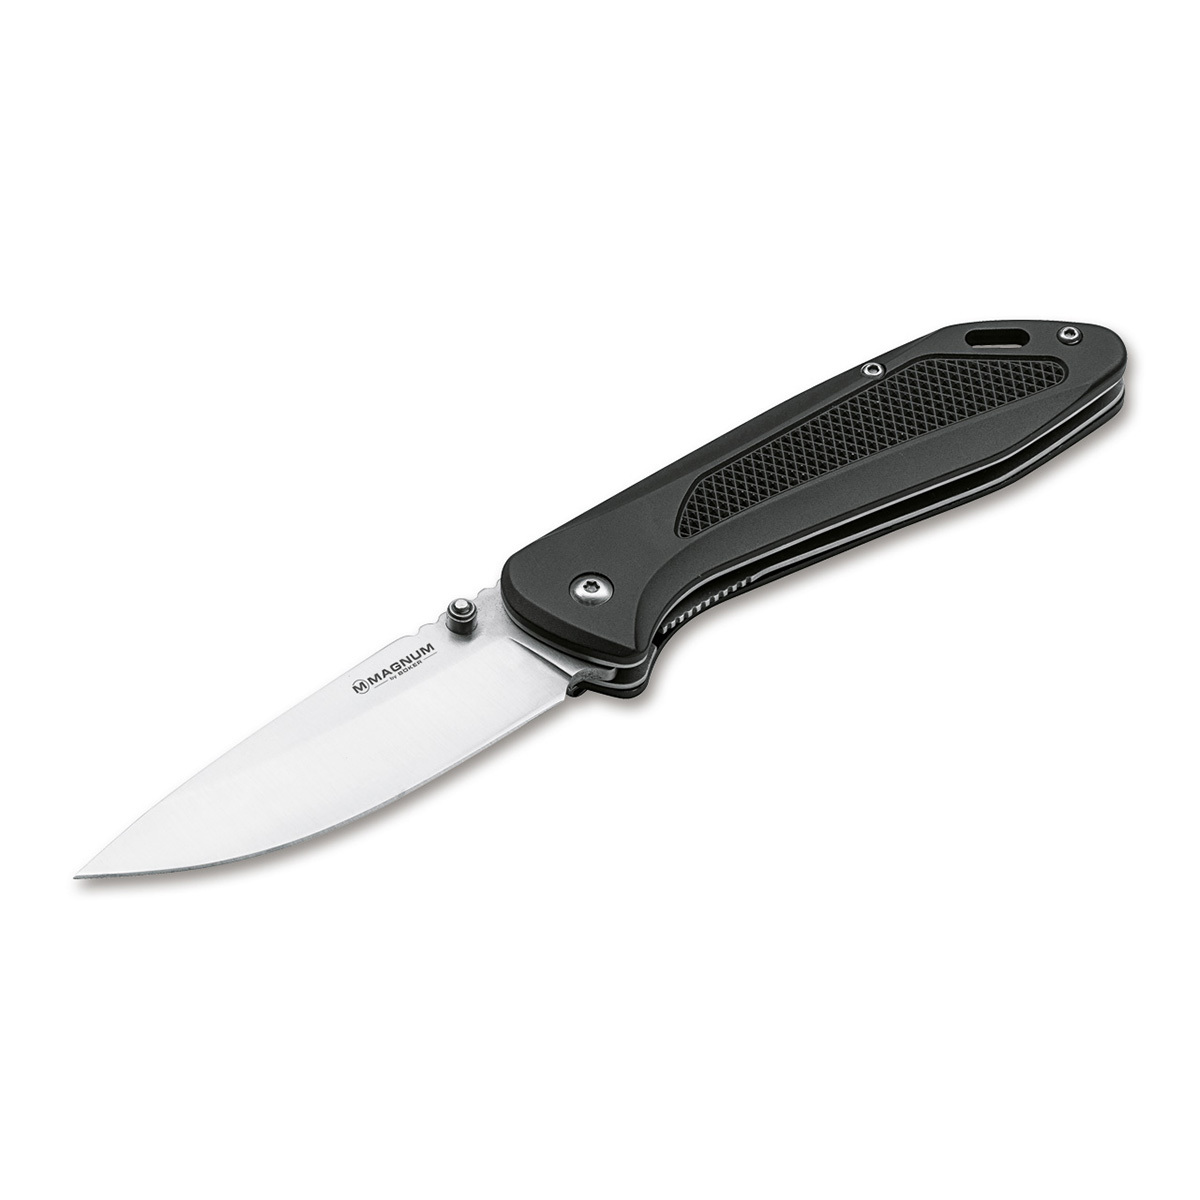 Нож складной Boker Advance black, сталь 440C, рукоять алюминий спортивный нож true flight thrower cold steel 80tftc углеродистая сталь s50c рукоять паракорд намотка